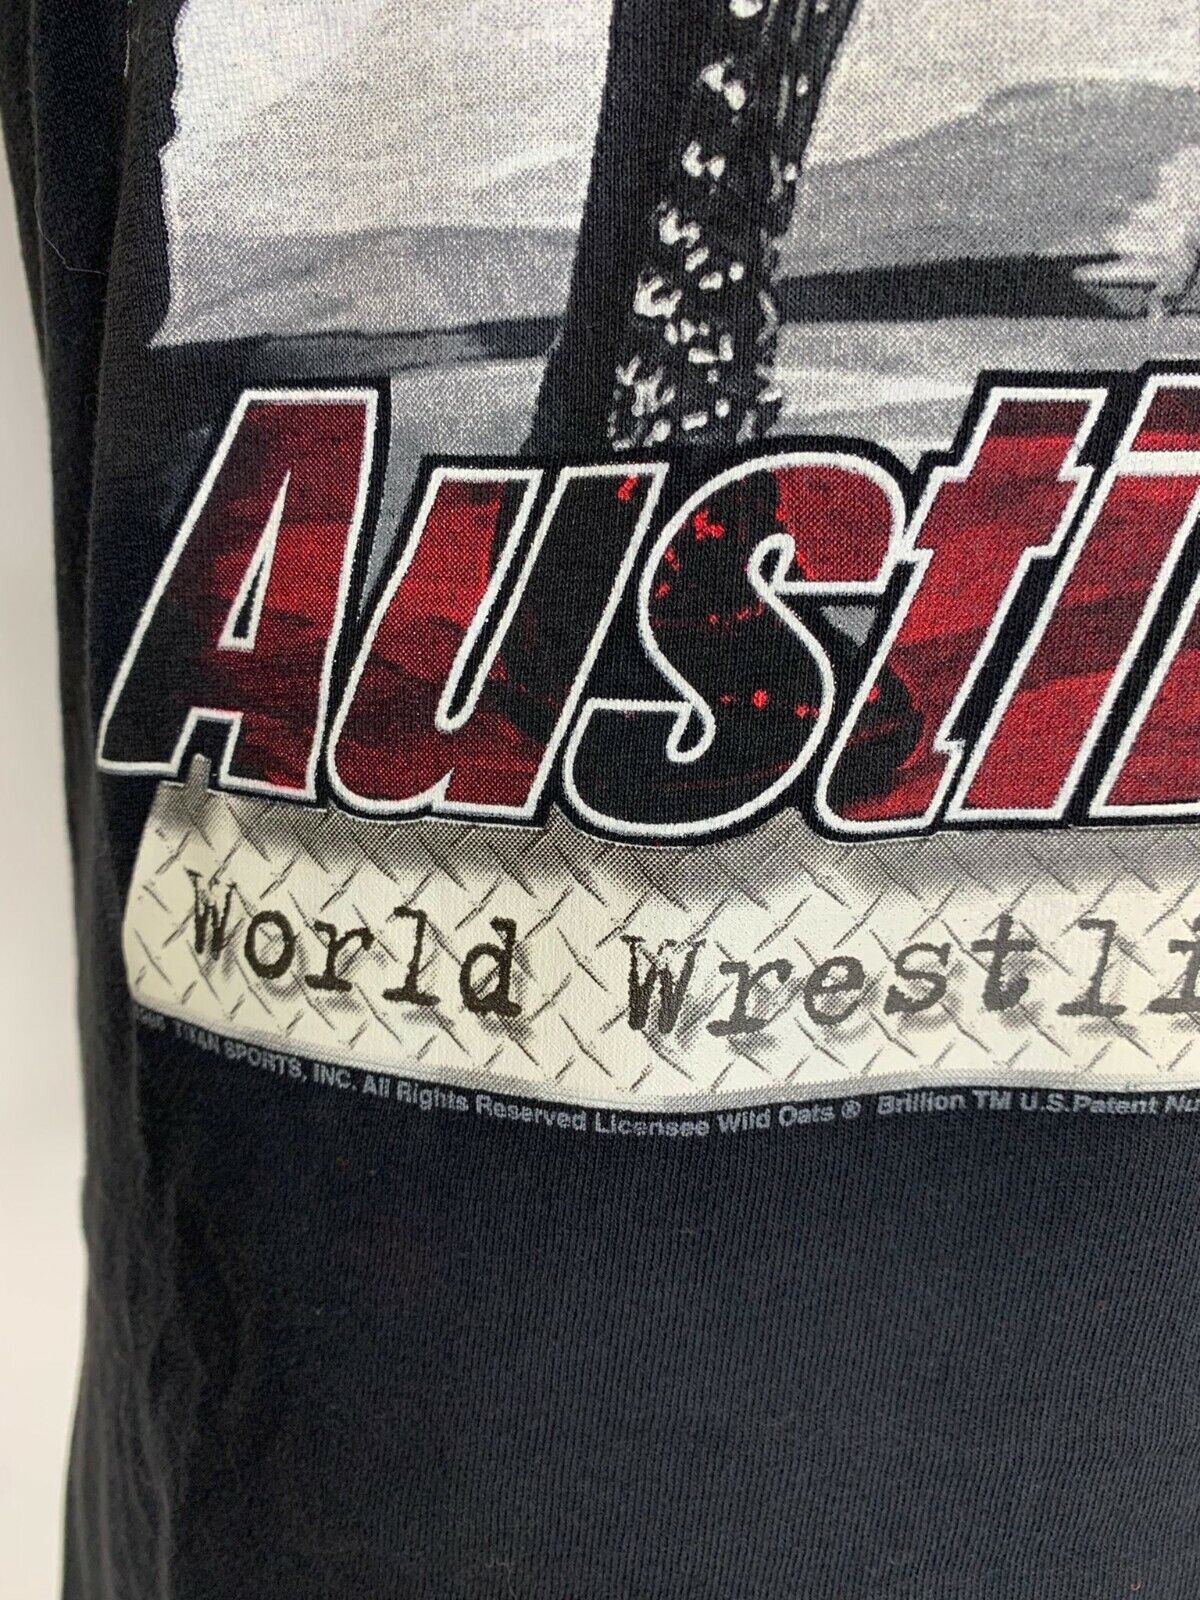 Stone Cold Steve Austin 3:16 Mens M WWF Attitude VTG T Shirt The Rock Wild Oats